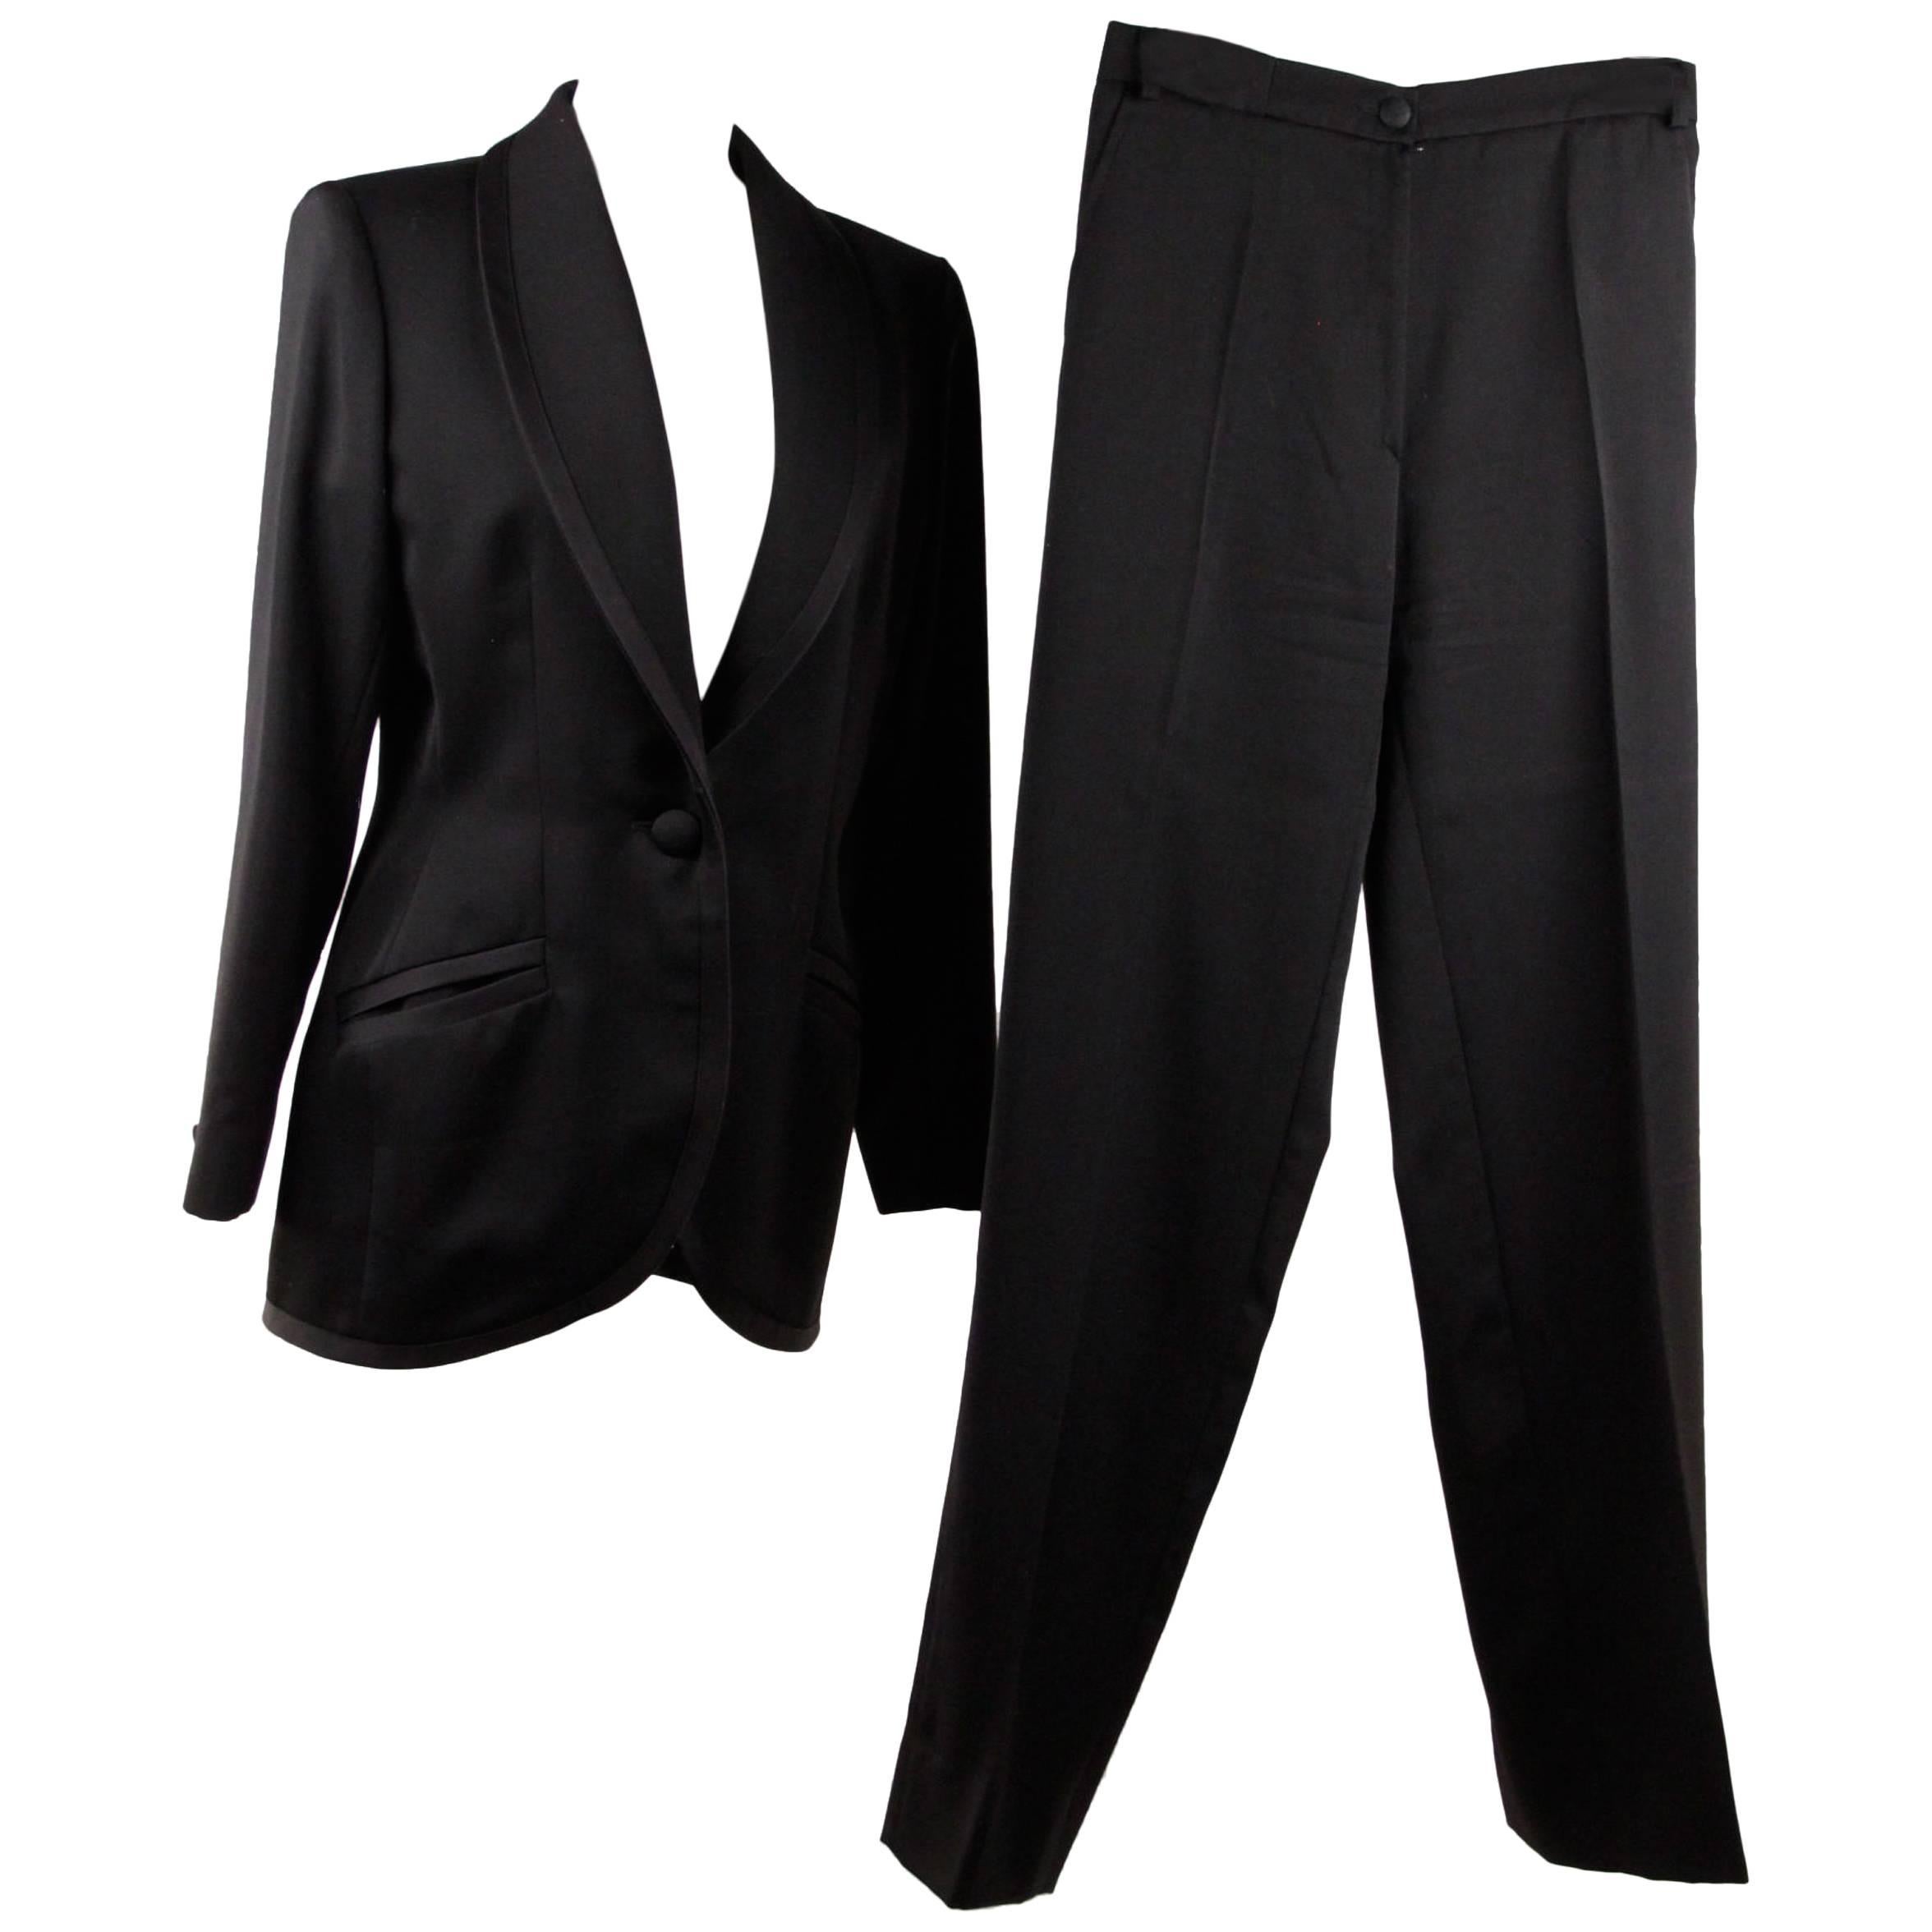 YVES SAINT LAURENT VARIATION Black TUXEDO SUIT Blazer Jacket & Trousers Pants AY